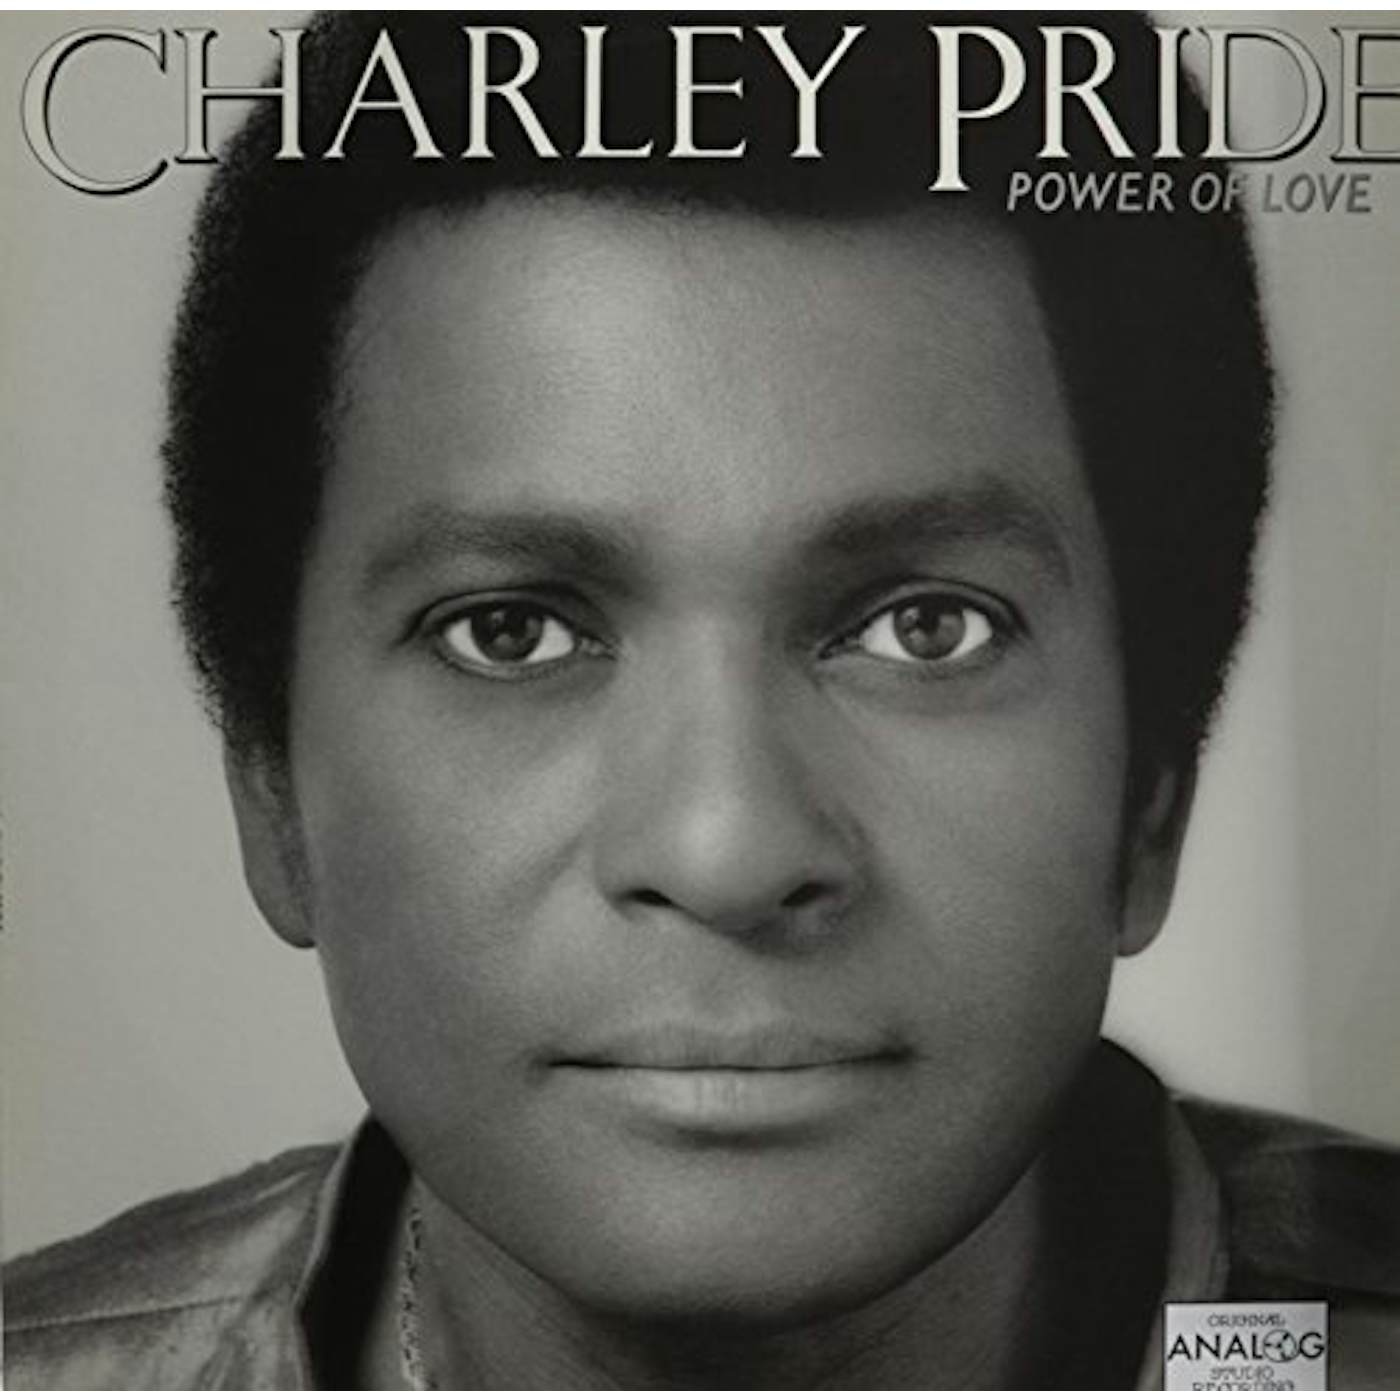 Charley Pride Power of Love Vinyl Record